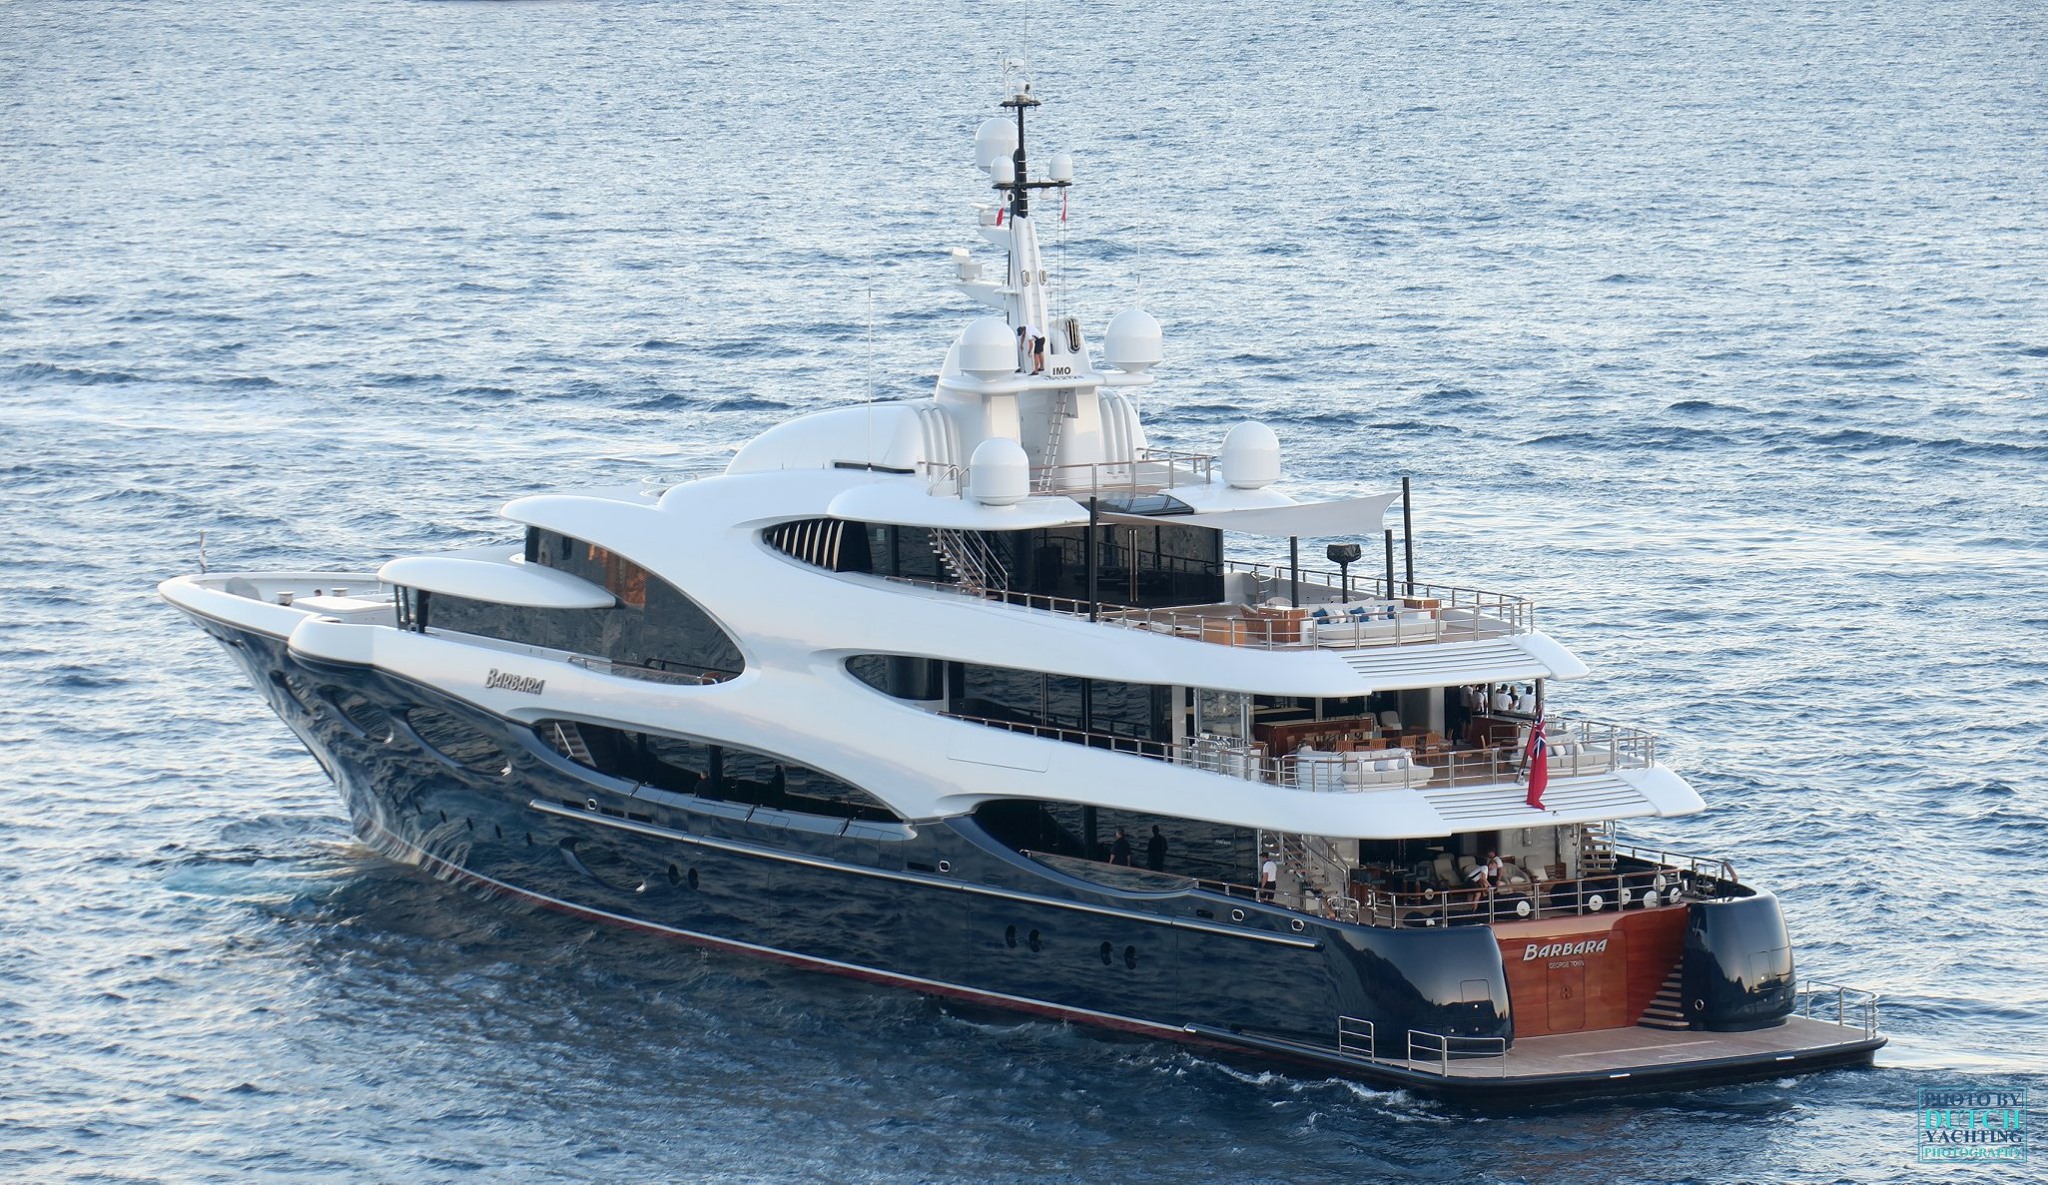 Billionaire S Eur 165 Million Superyacht Barbara Spotted In Monaco Yacht Harbour